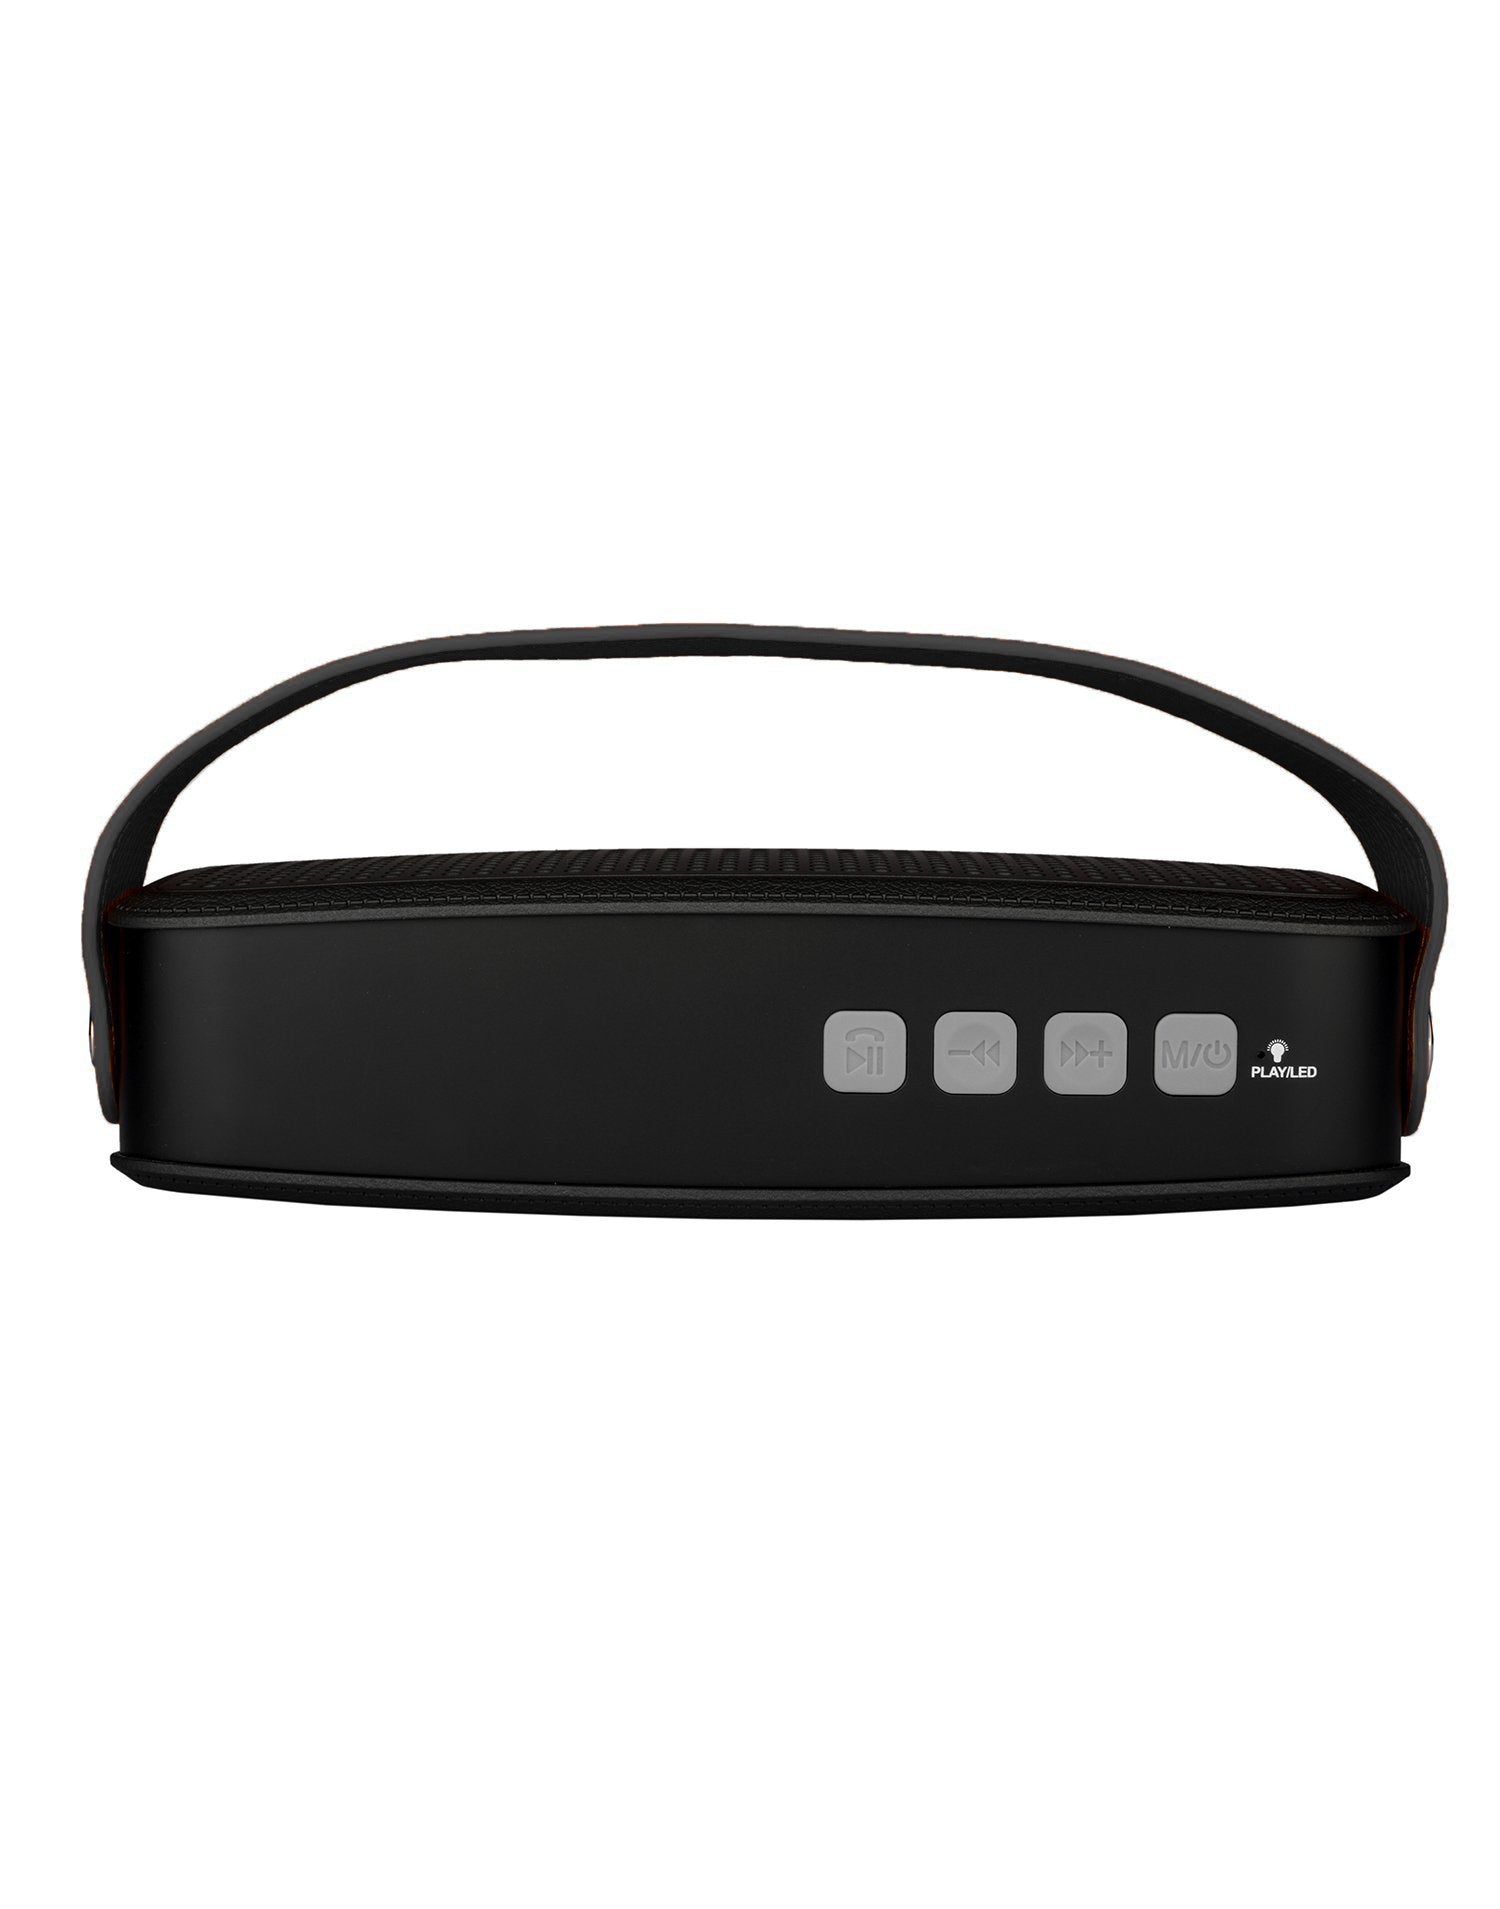 THUNDER - Portable Bluetooth Speaker - Black ARCADIO